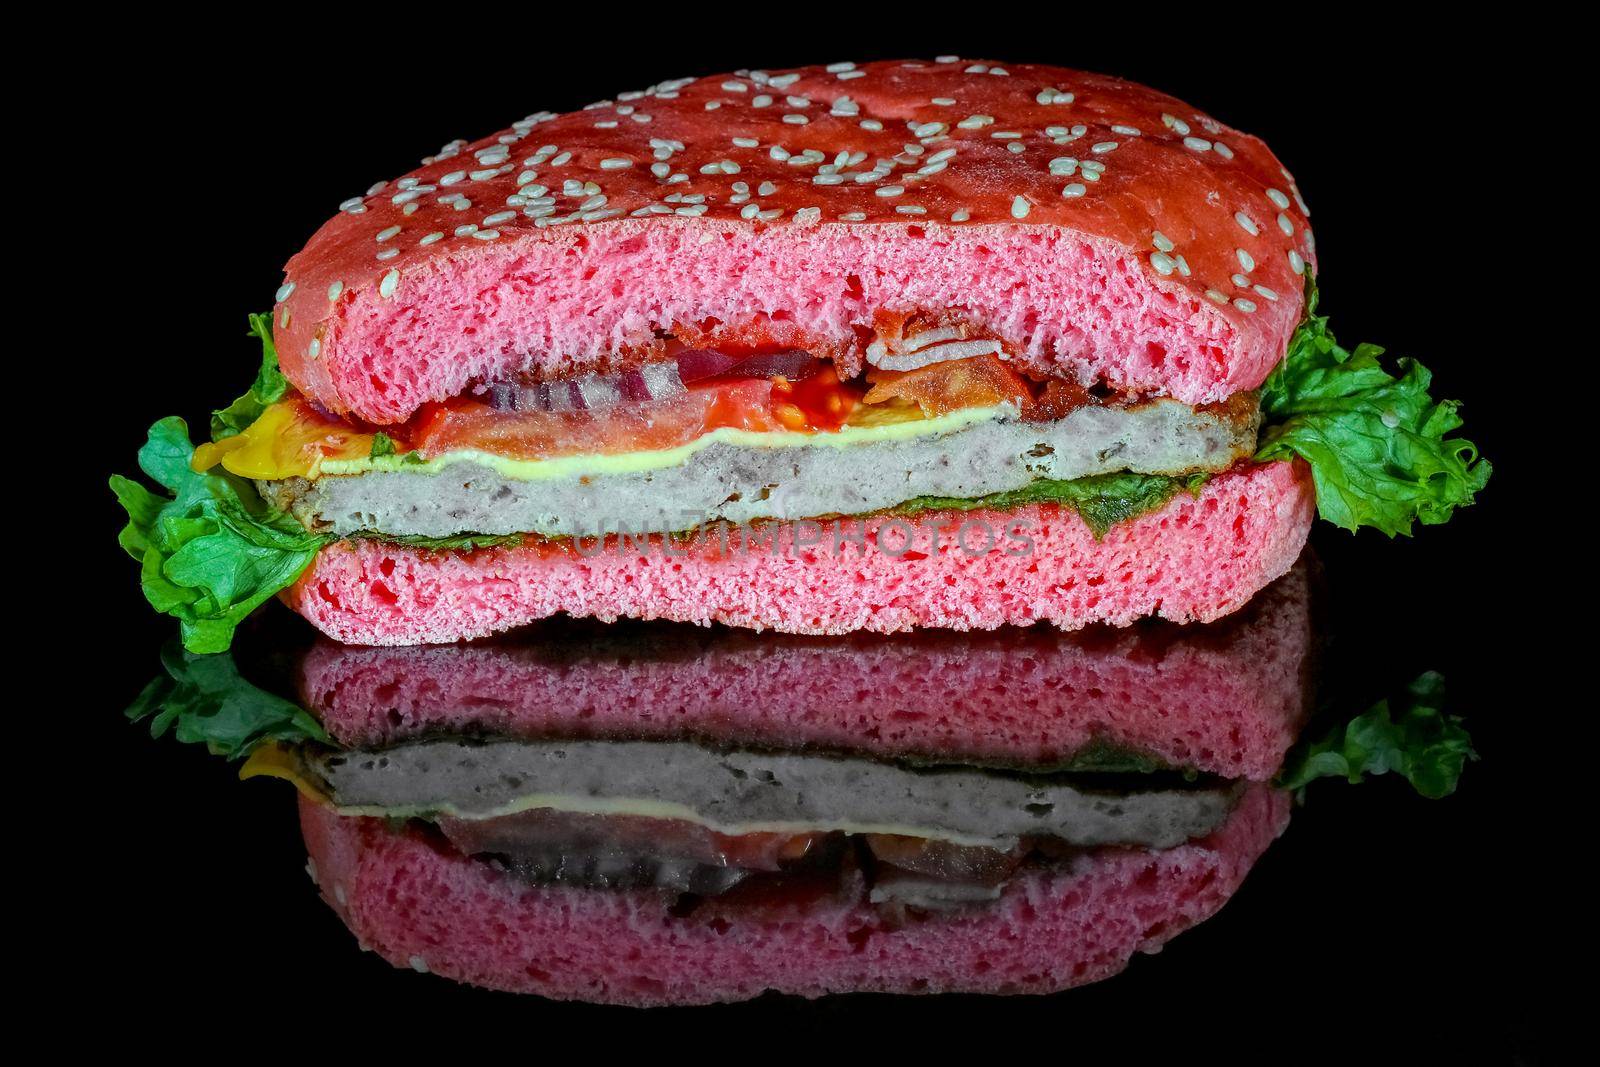 red hamburger on a black background macro. High quality photo